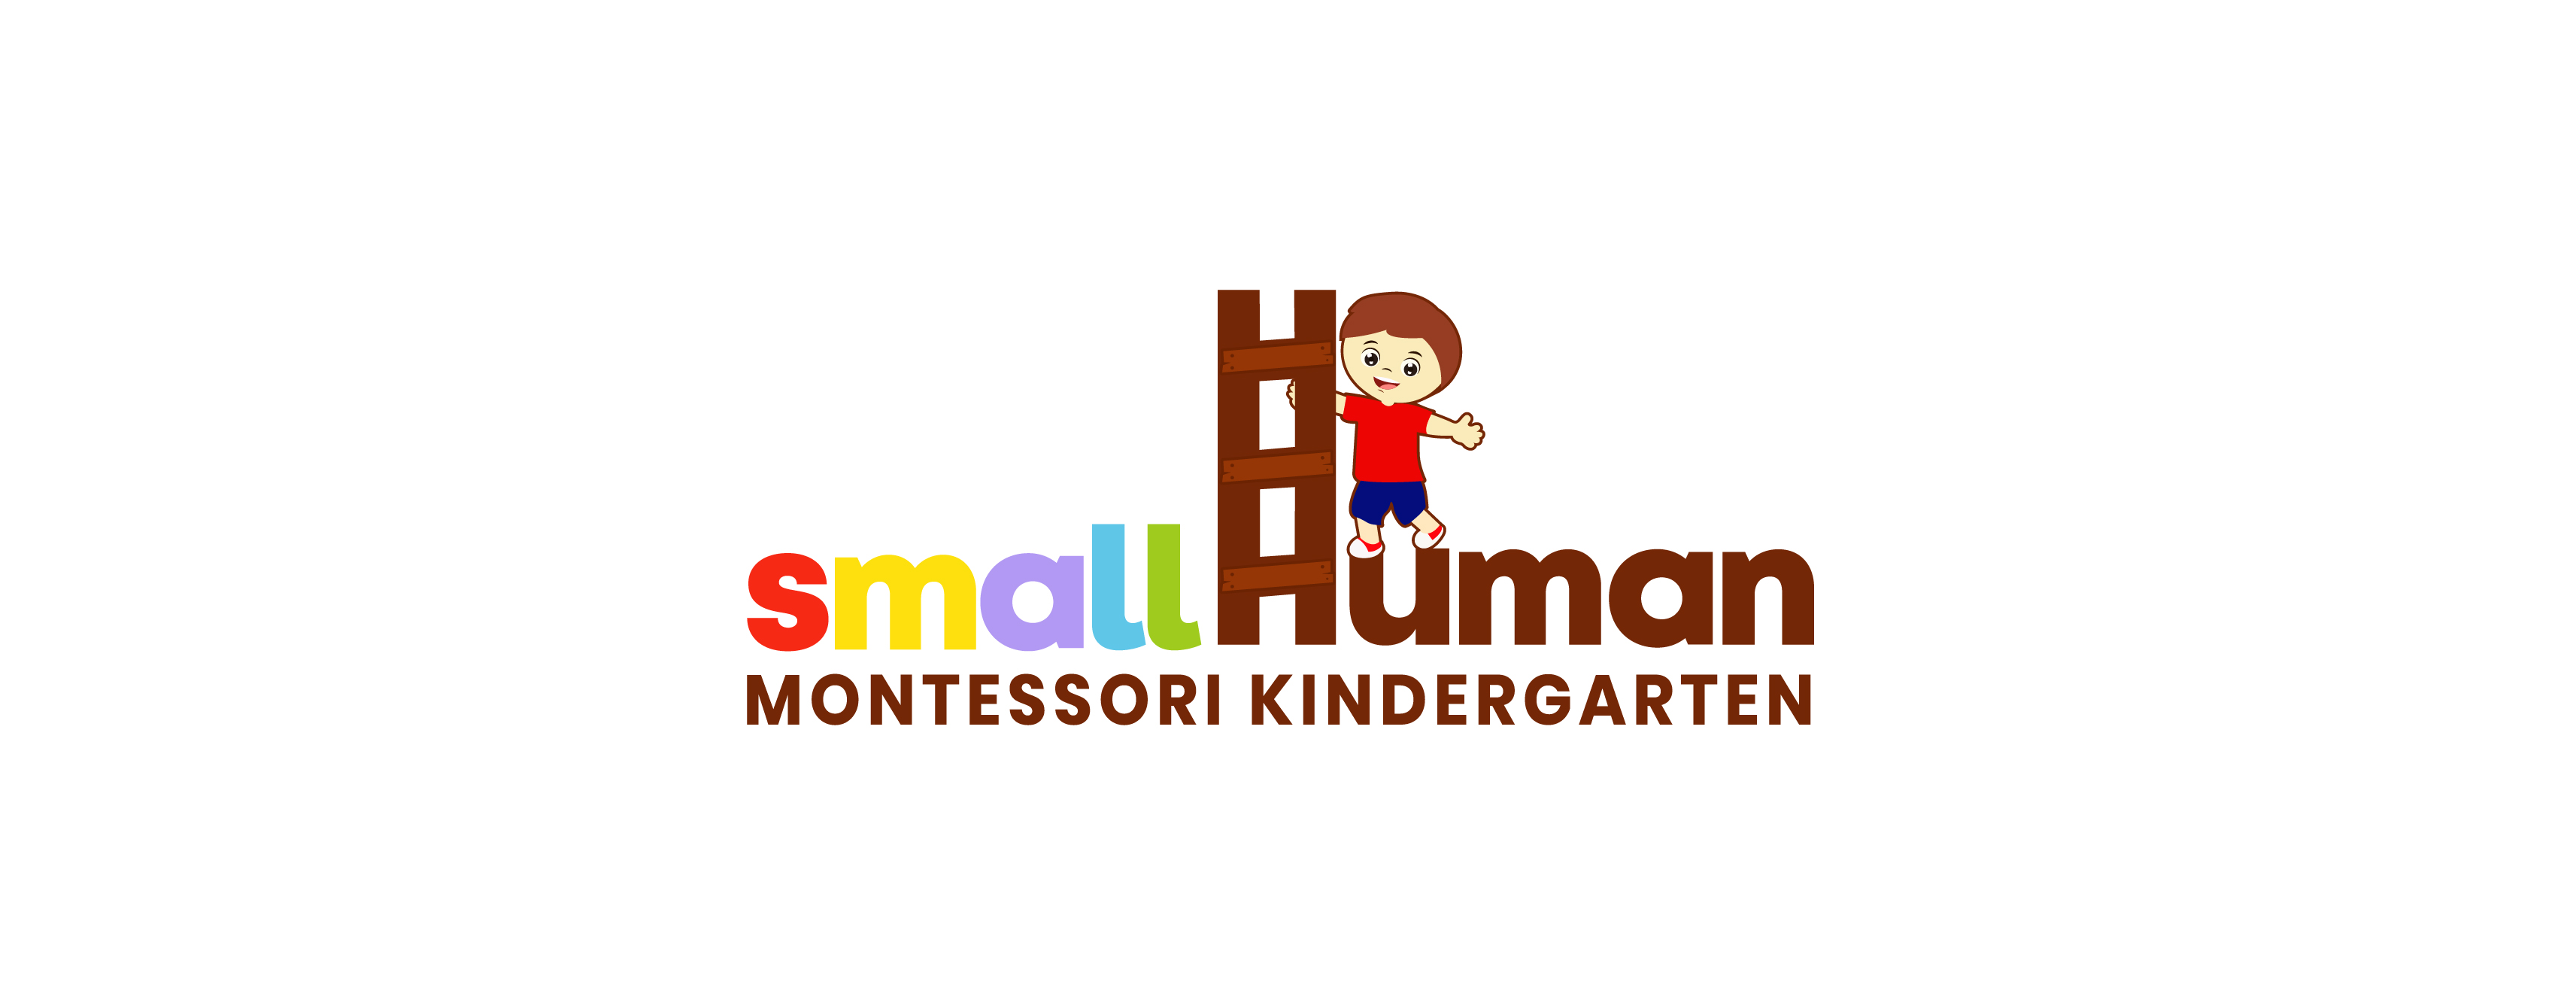 Small Human Montessori Kindergarten